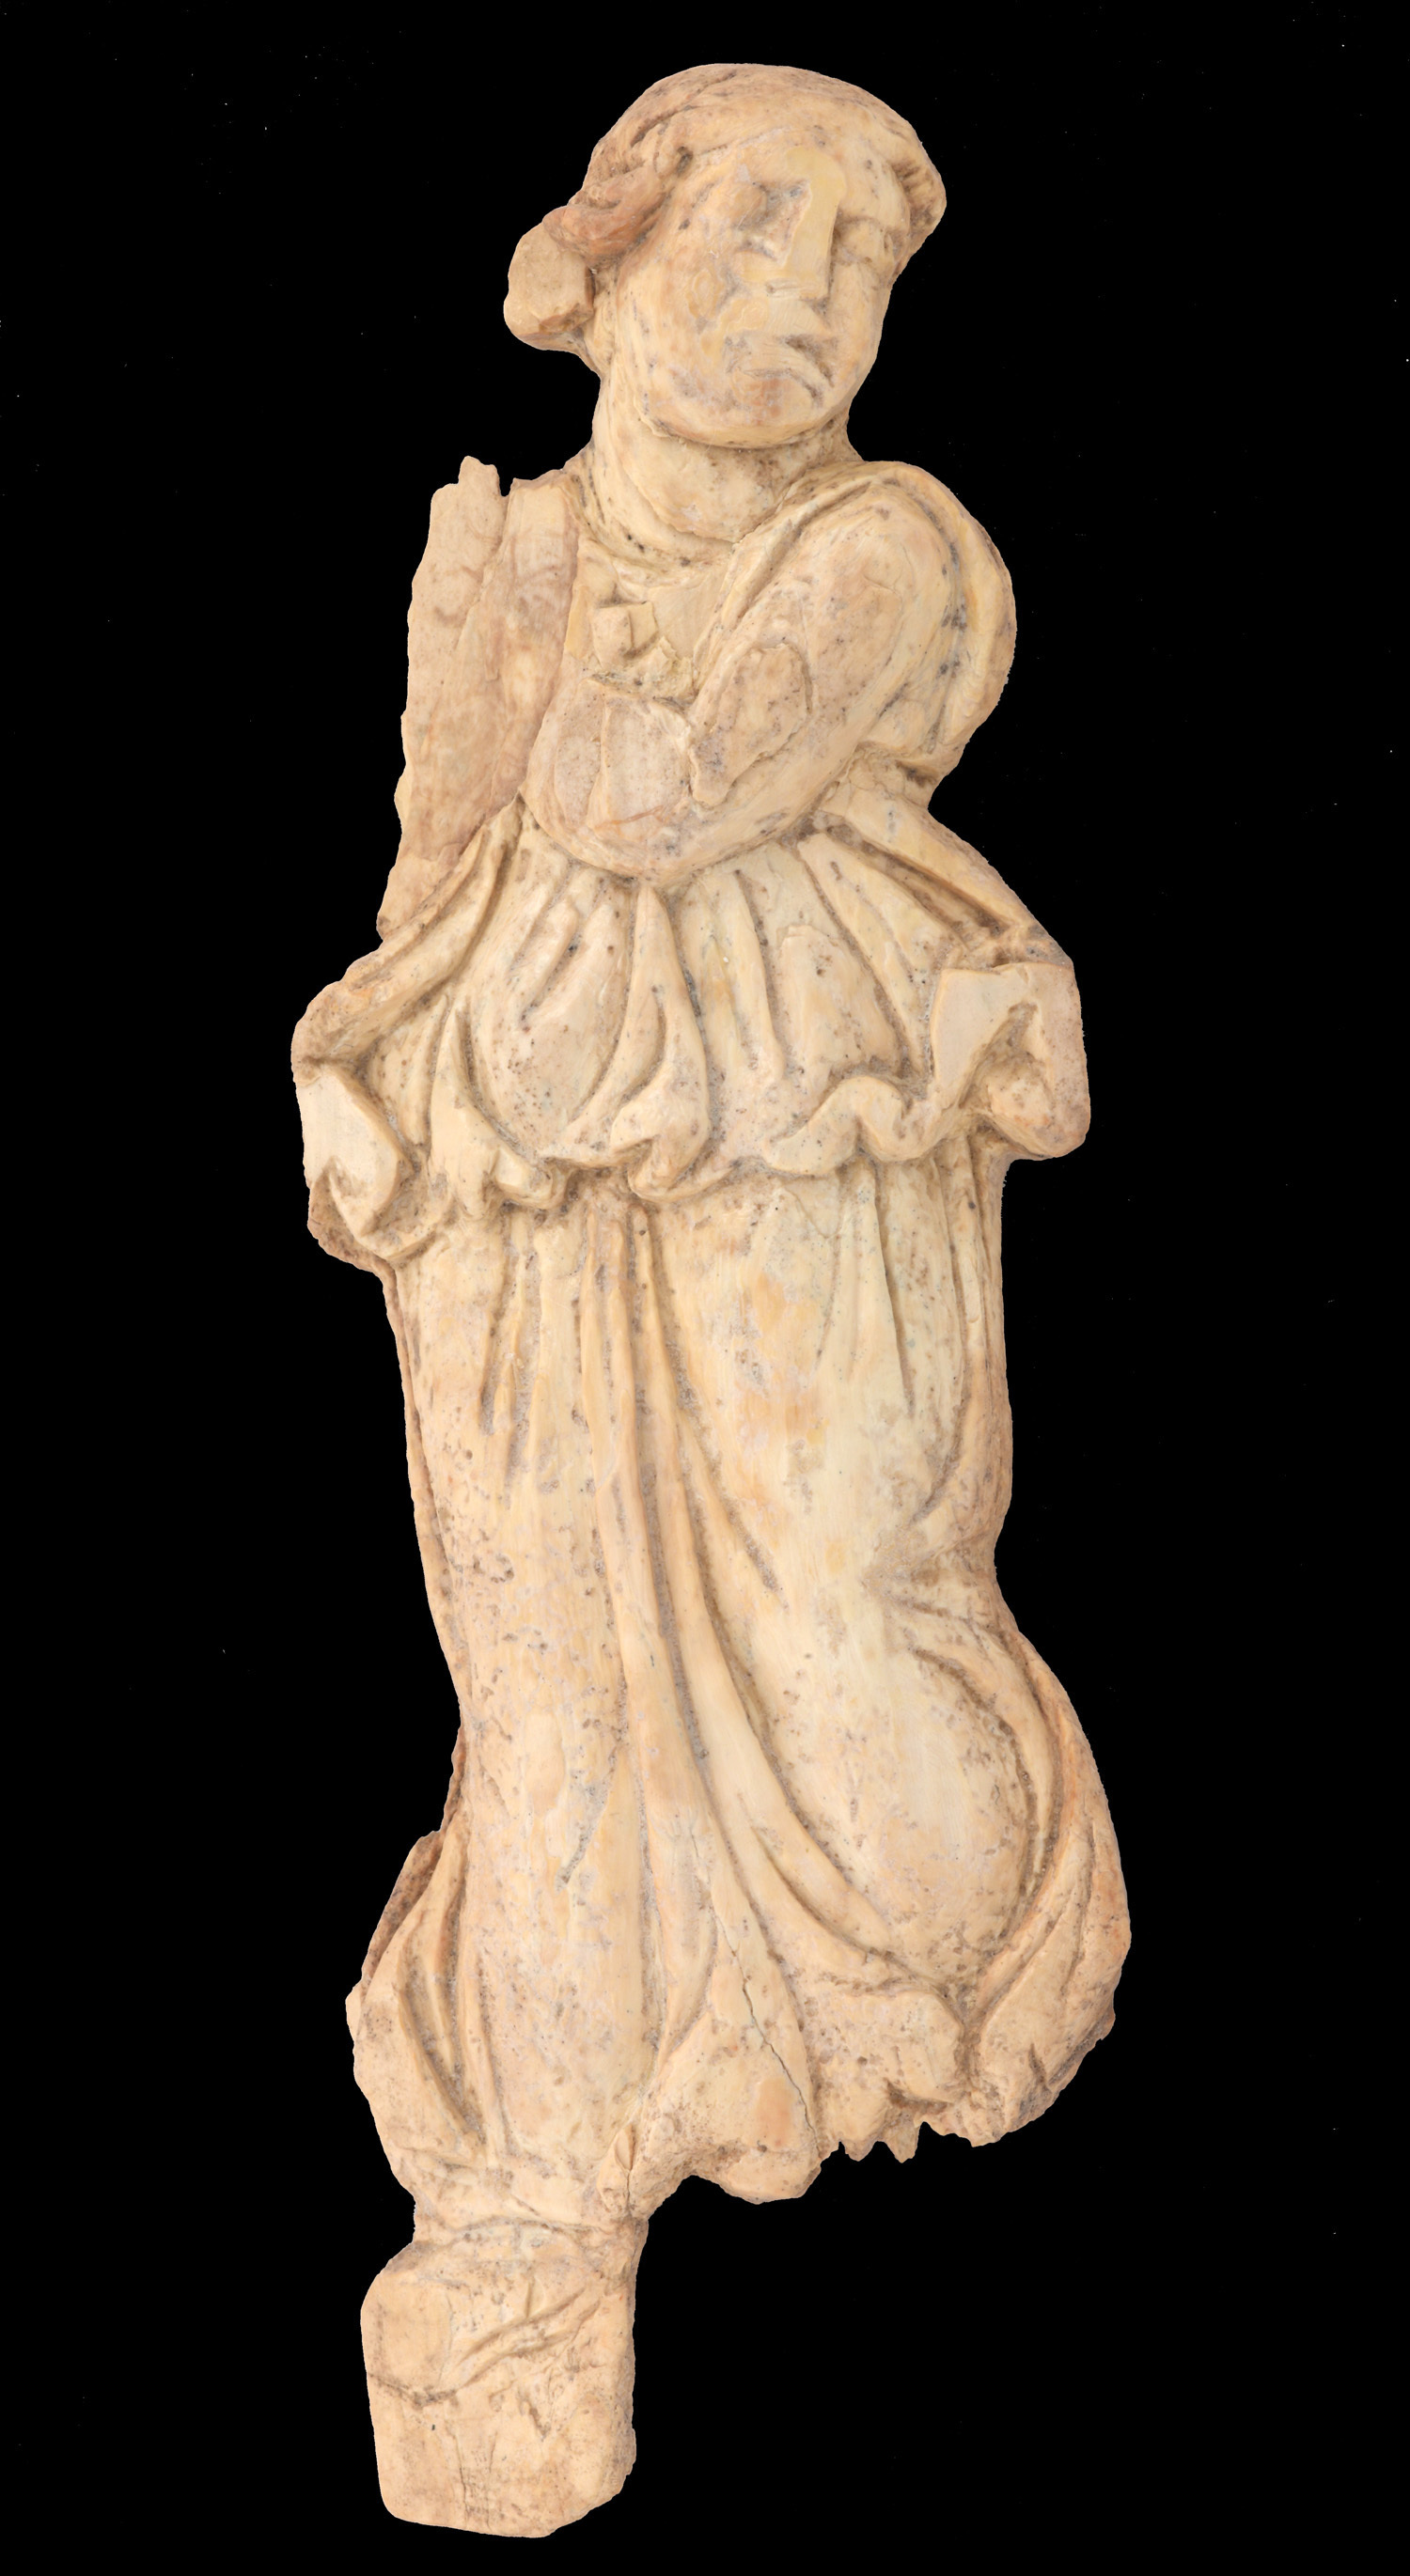 A bone figurine of a woman dancing (COURTESY DR. MICHAEL EISENBERG)